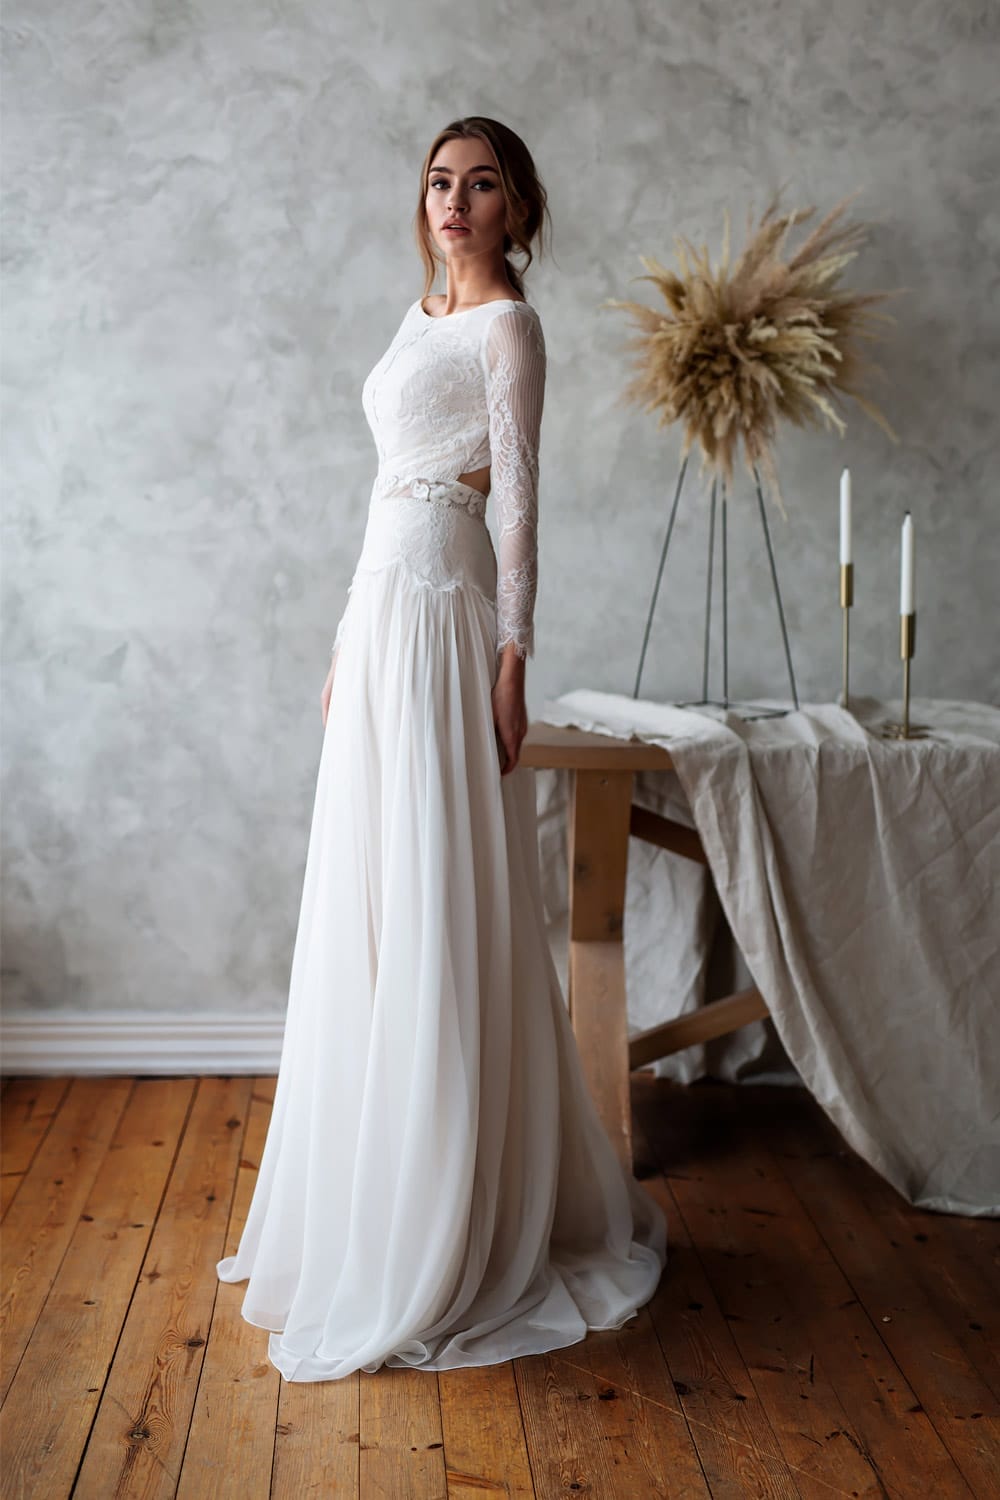 Get The Look: 9 Sleeve Wedding Dresses Inspired by Lily Collins Vintage  Bridal Look - Wedding Journal